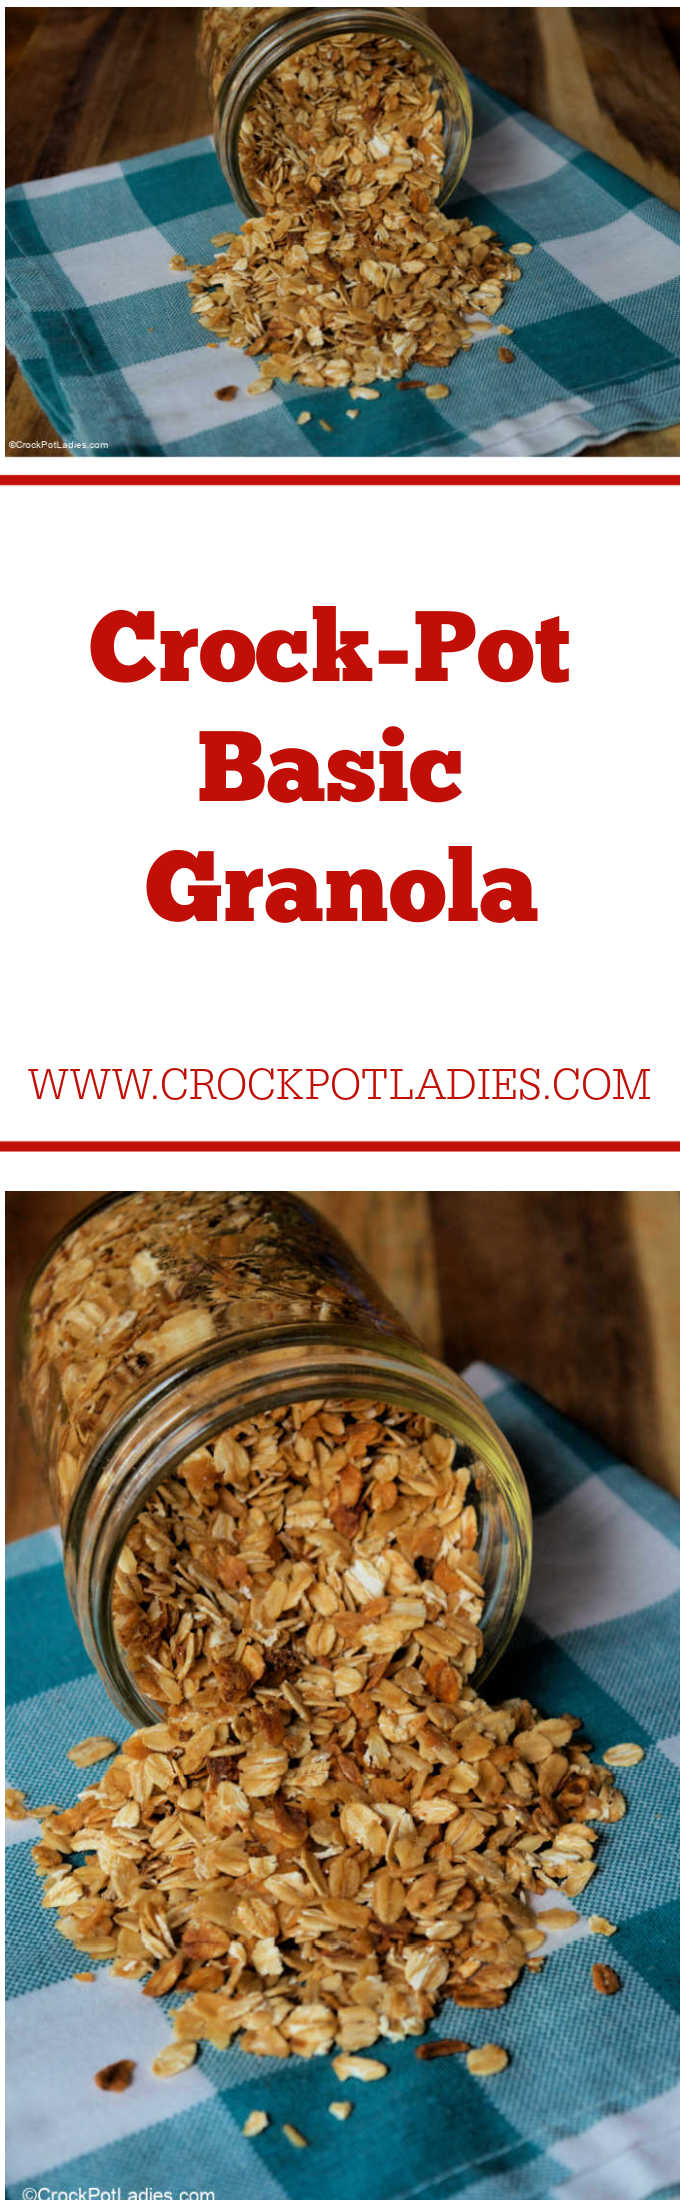 Crock-Pot Basic Granola